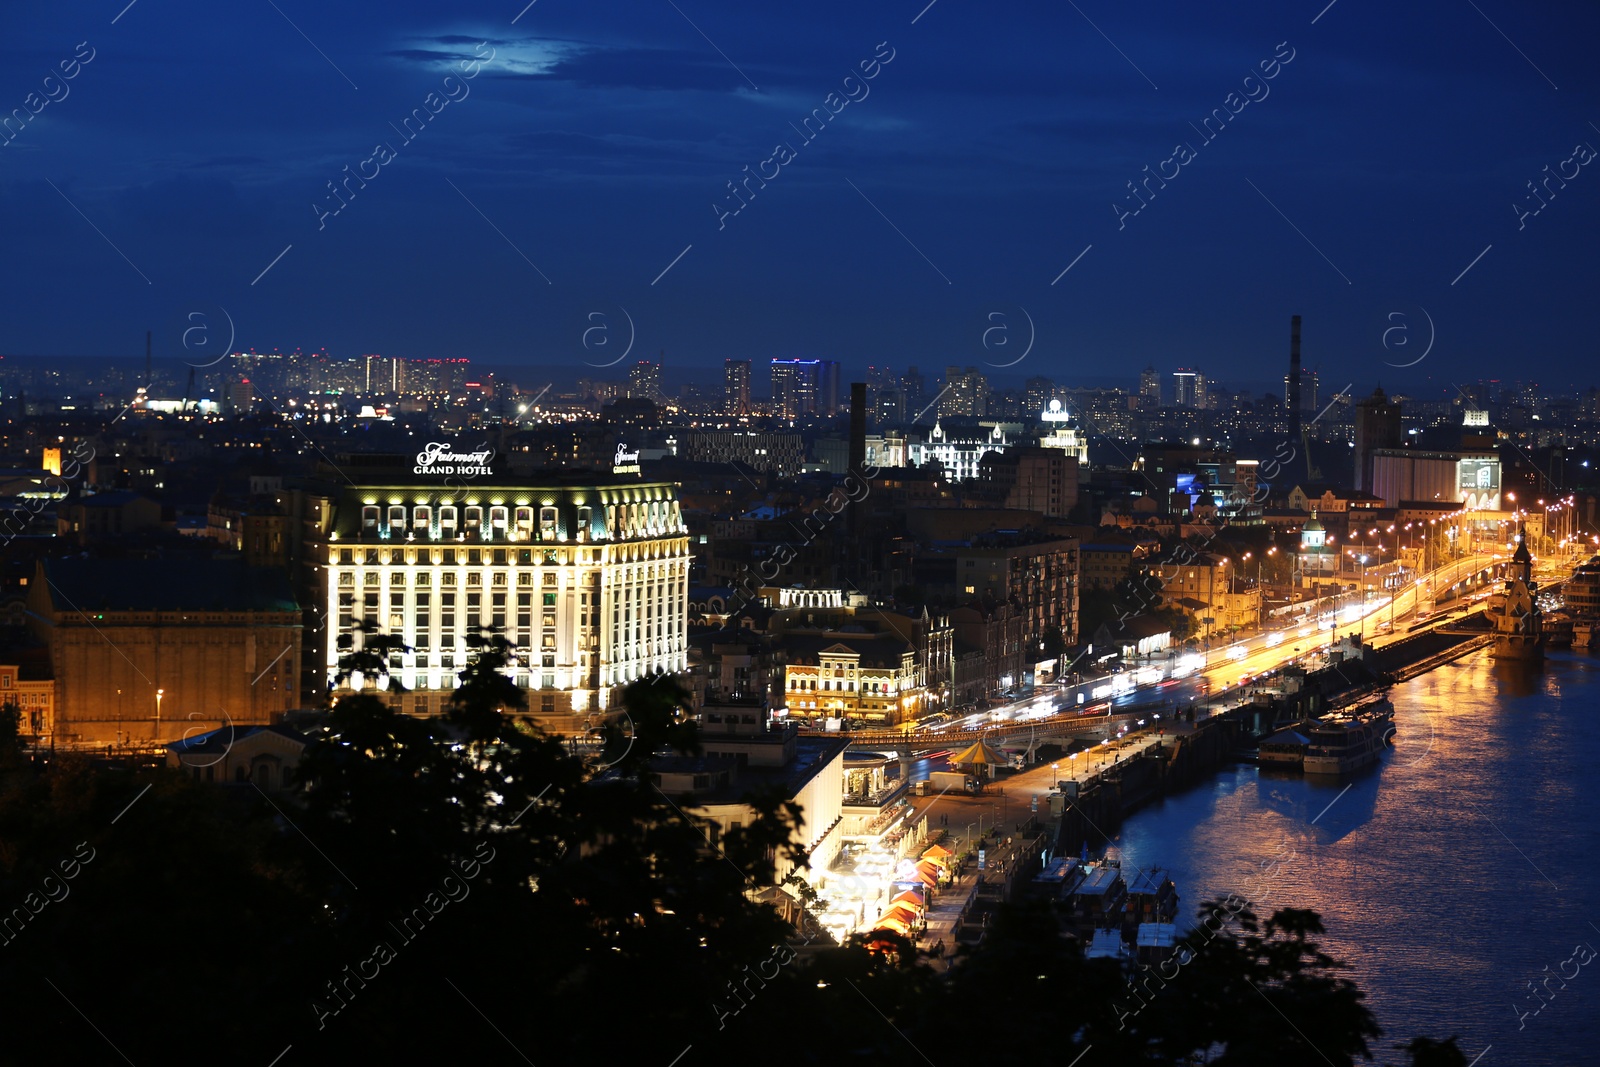 Photo of KYIV, UKRAINE - MAY 21, 2019: Beautiful view of night cityscape with illuminated buildings near river and bridge